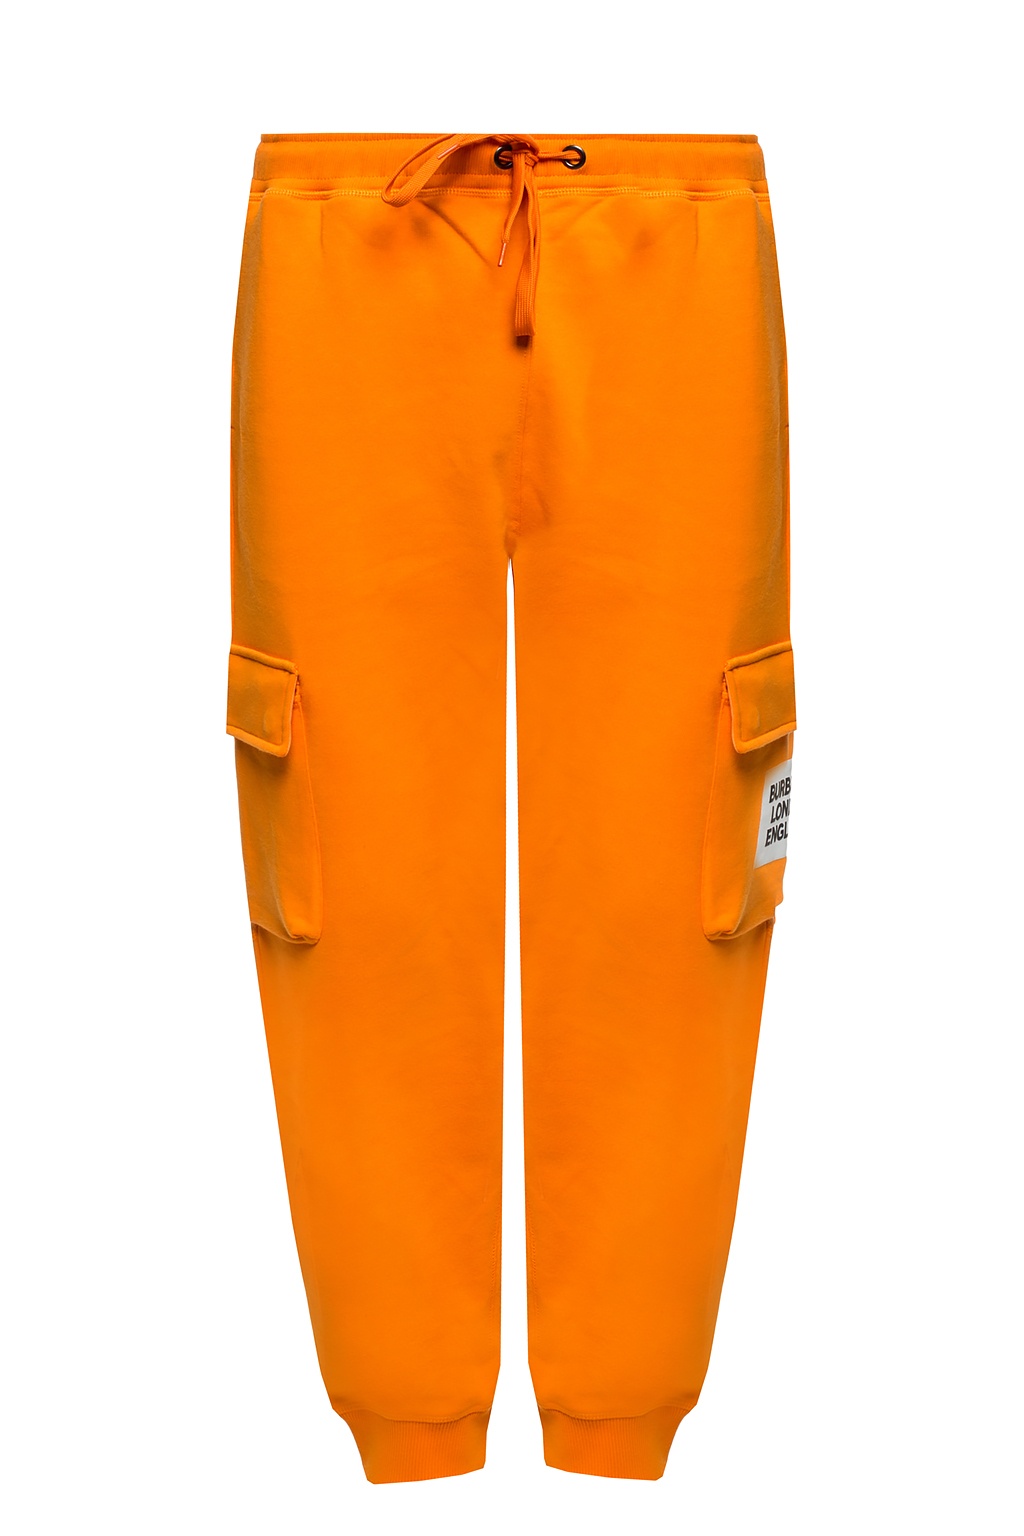 Branded sweatpants Burberry - Vitkac Sweden